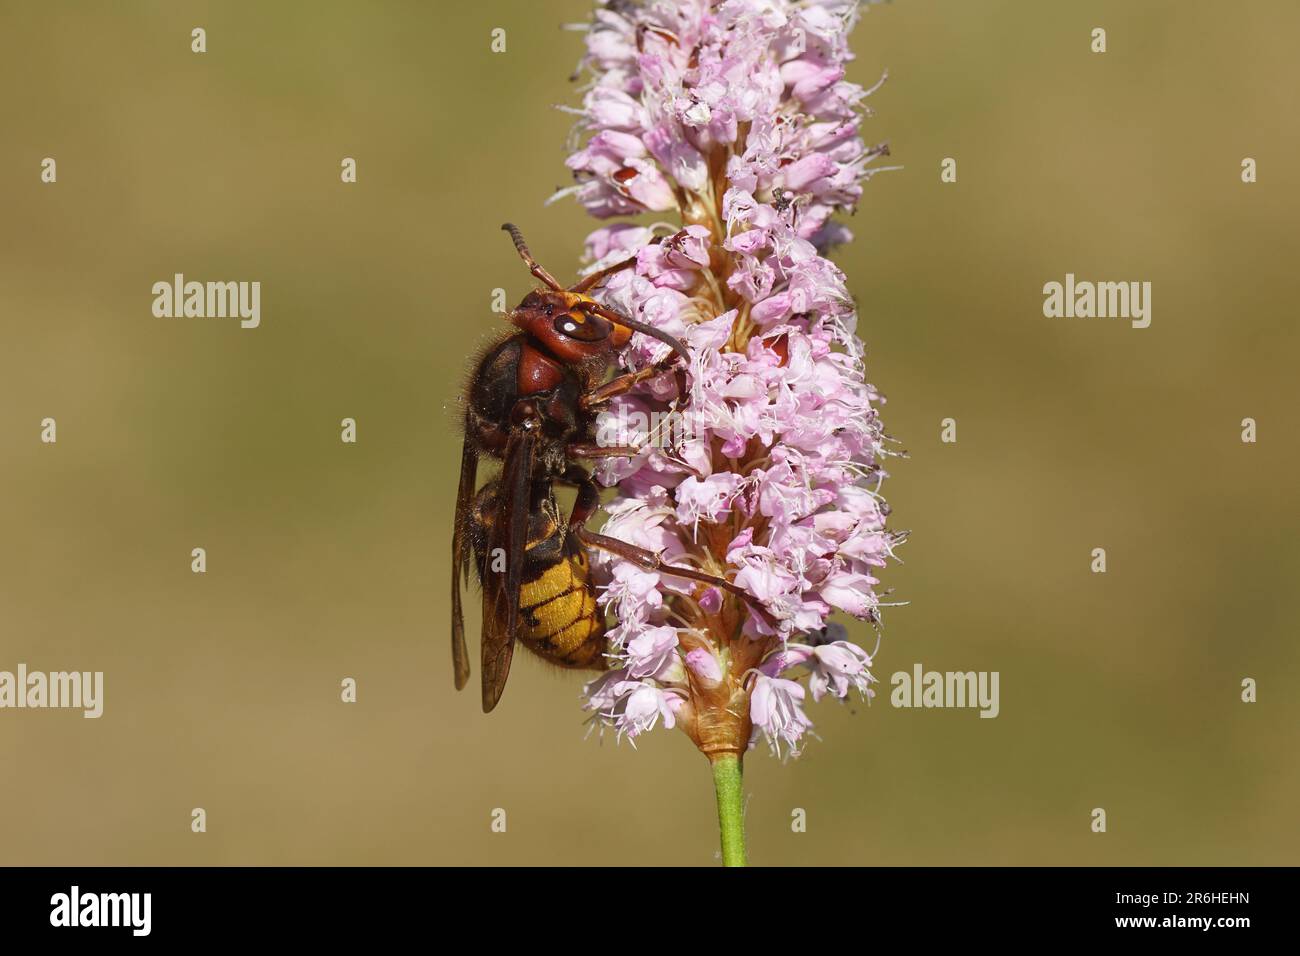 Queen European hornet (Vespa crabro), family Vespidae) on flowers of bistort (Bistorta officinalis, synonym Persicaria bistorta), dock family Stock Photo